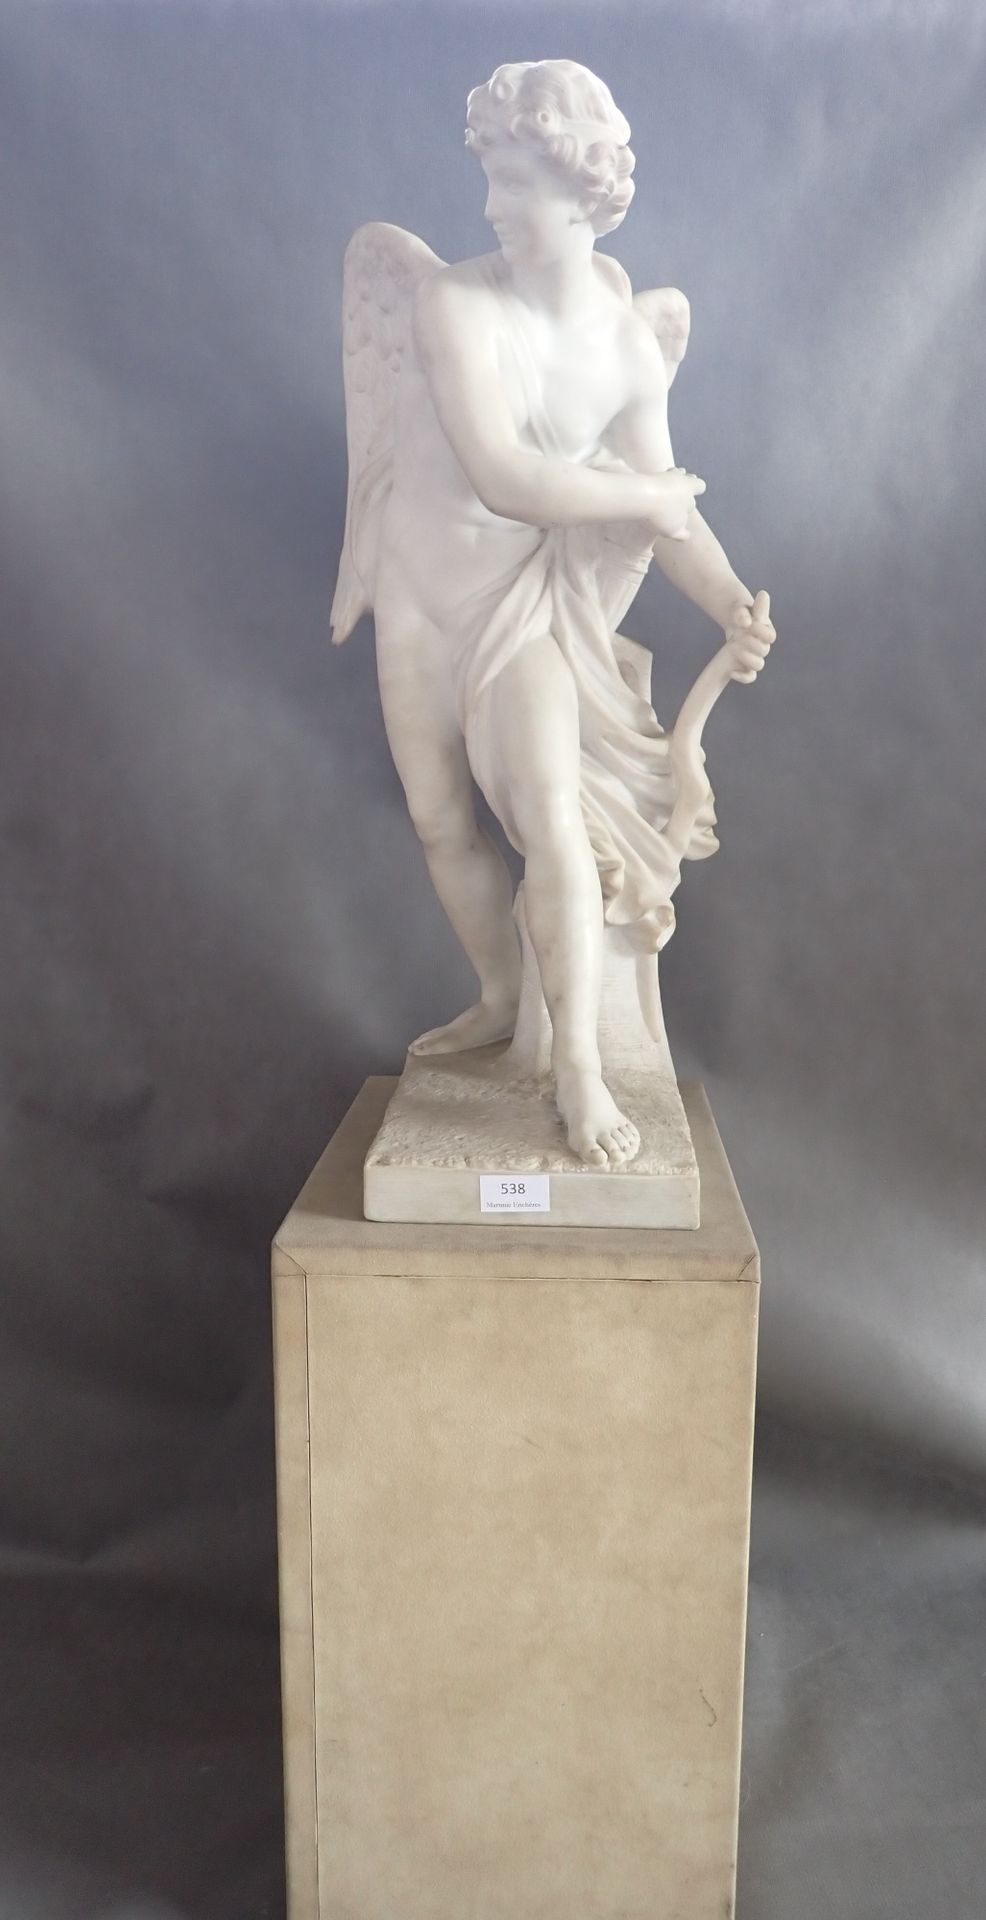 Null 大理石雕塑《丘比特之后》（BOIZOT after Cupid），高 62.5 厘米